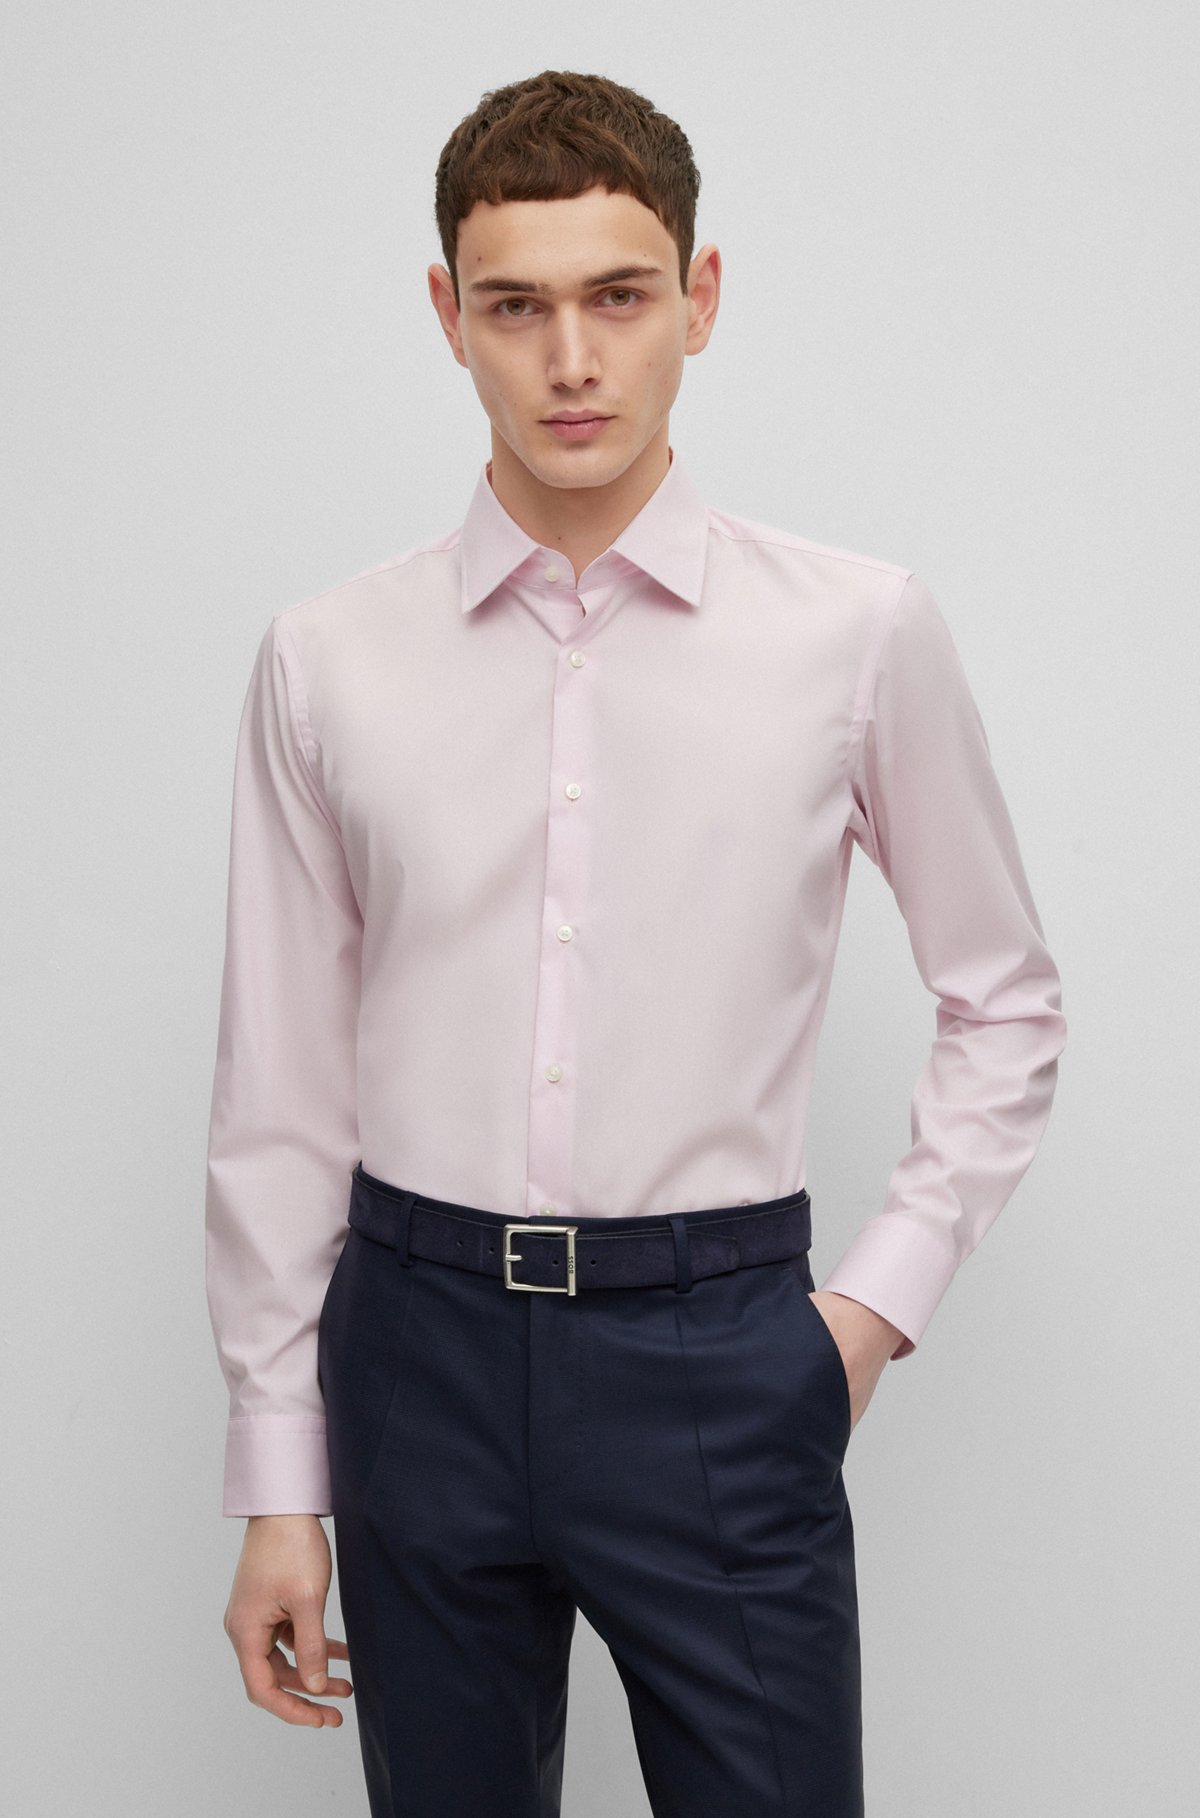 Regular-fit shirt in easy-iron stretch-cotton poplin, light pink